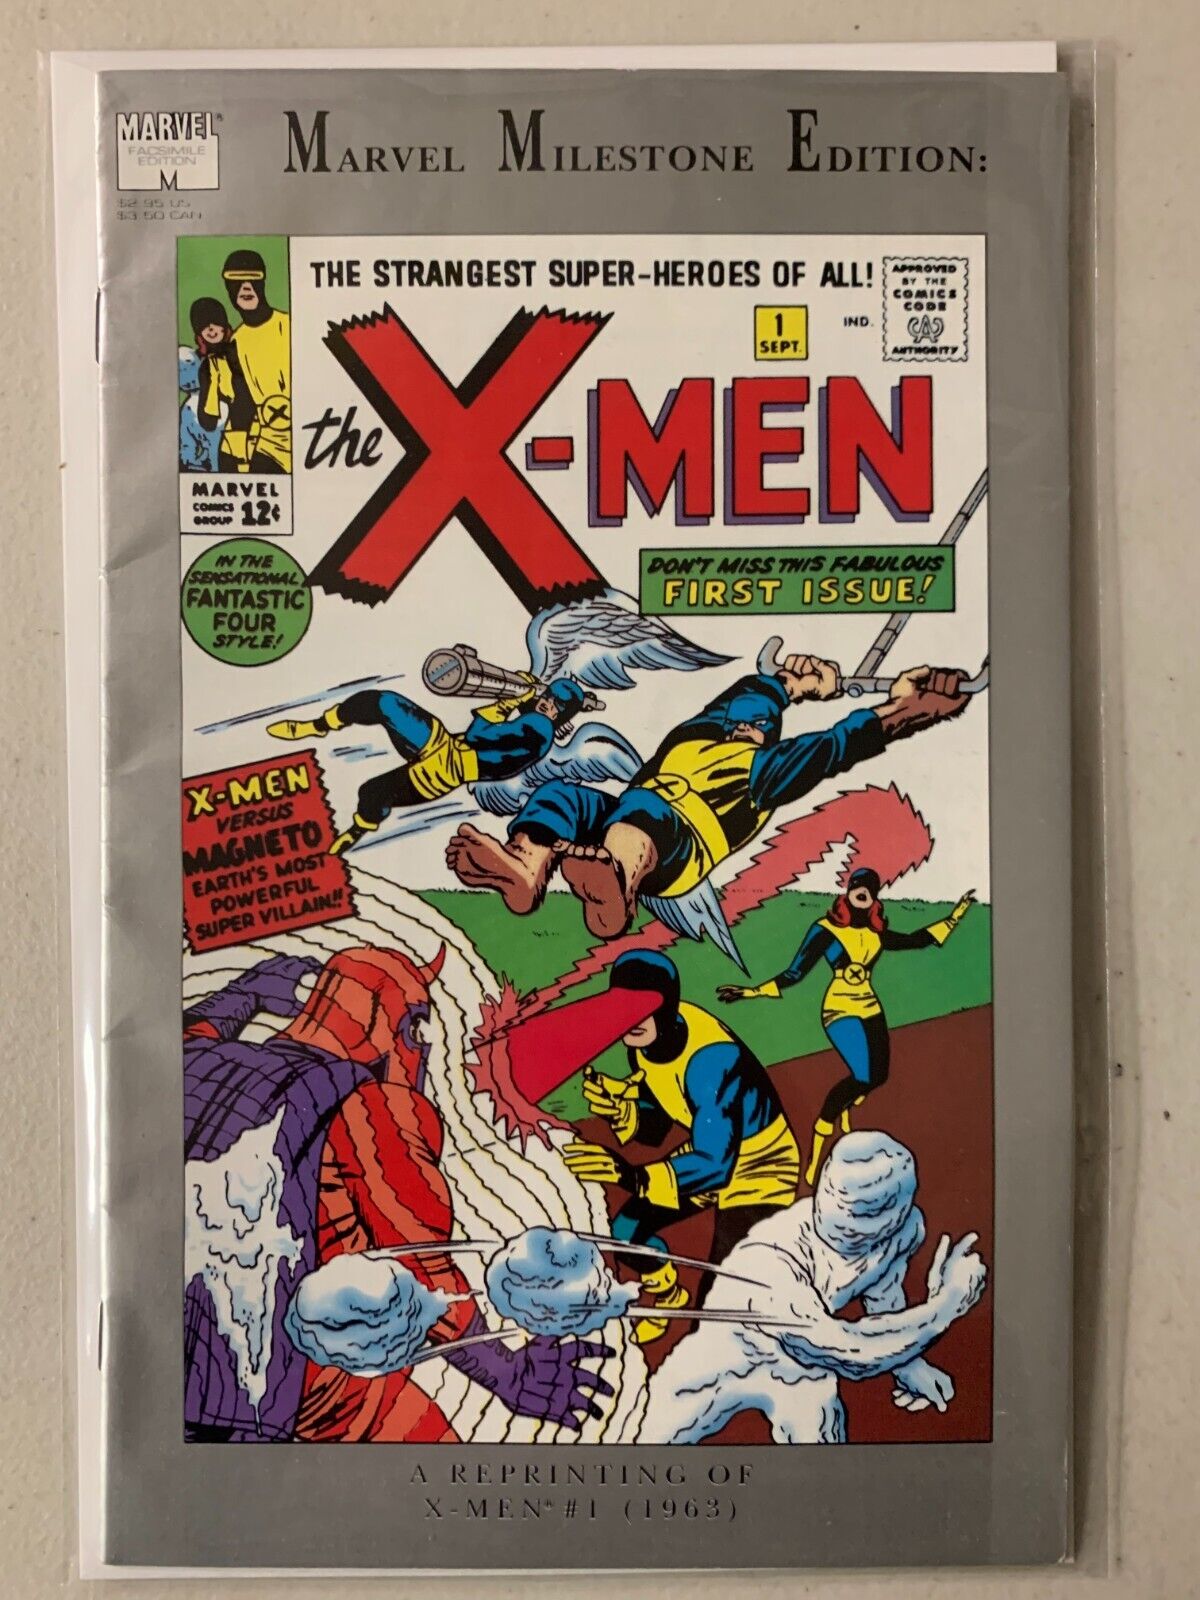 Marvel Milestone Edition X-Men #1 reprint 6.0 (1991)